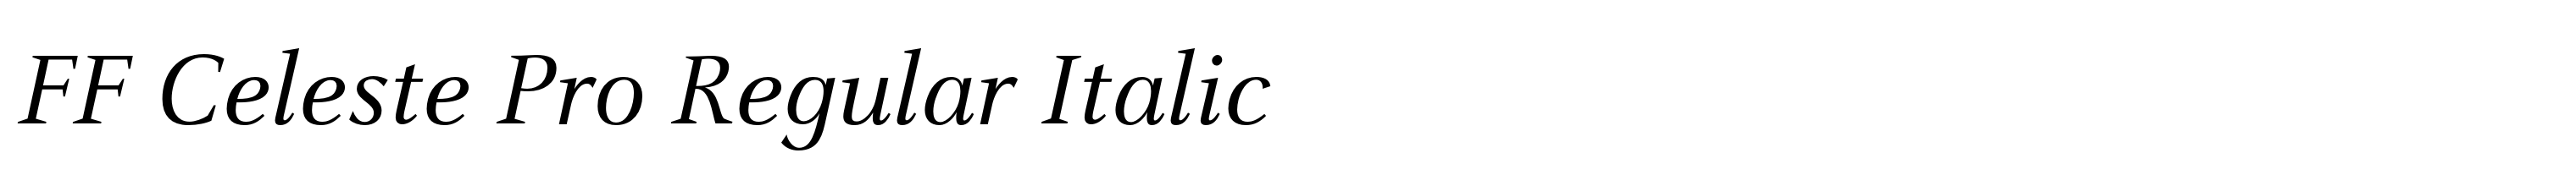 FF Celeste Pro Regular Italic